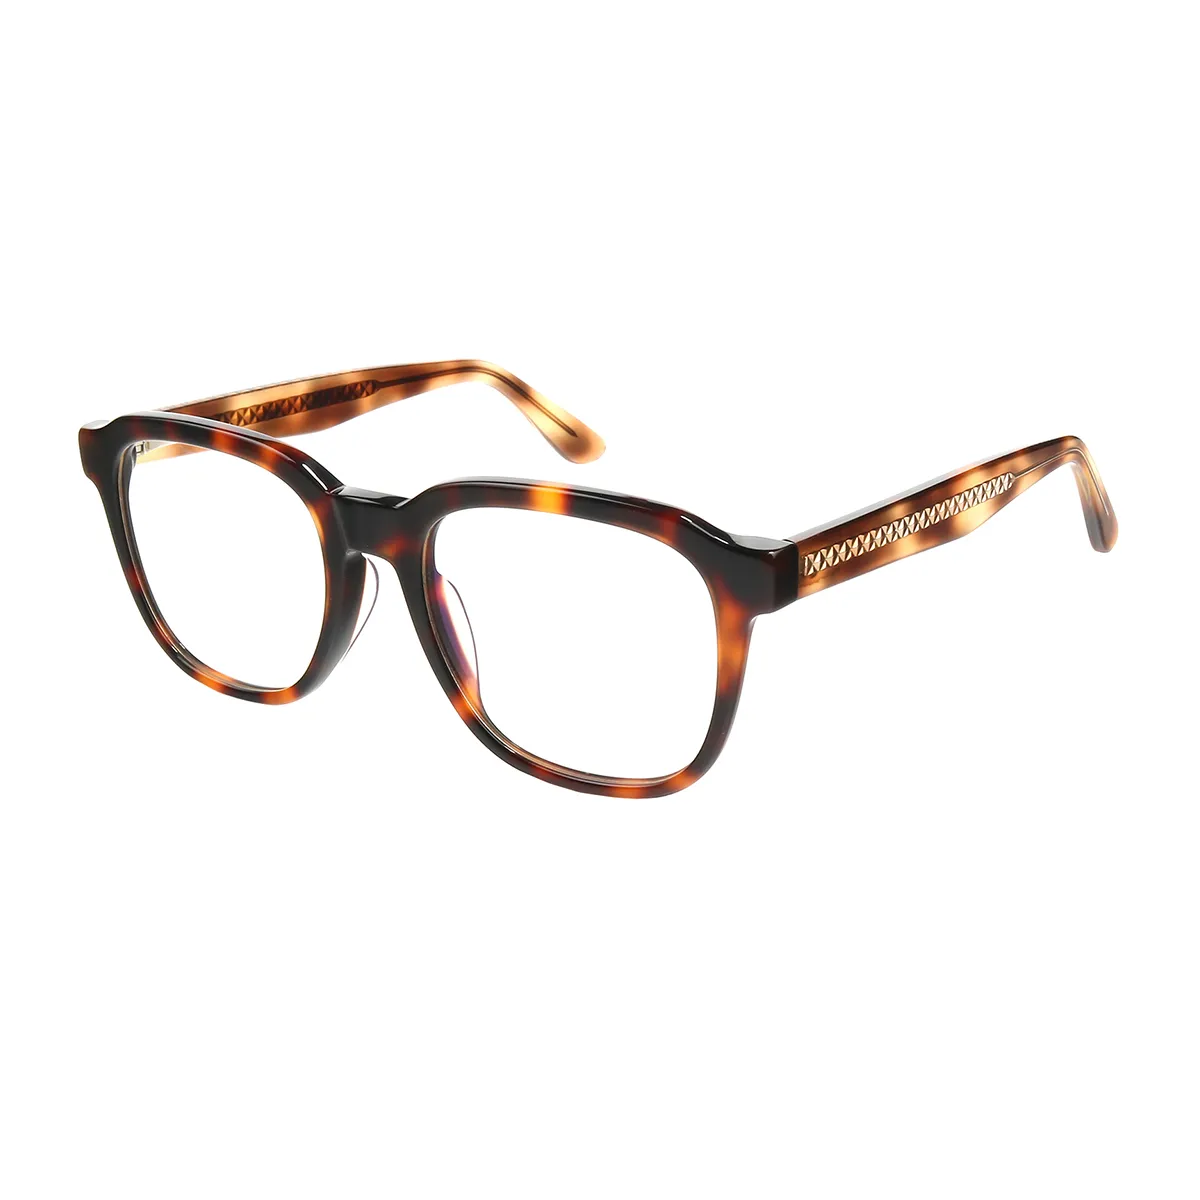 Knox - Square Tortoiseshell Glasses for Men - EFE